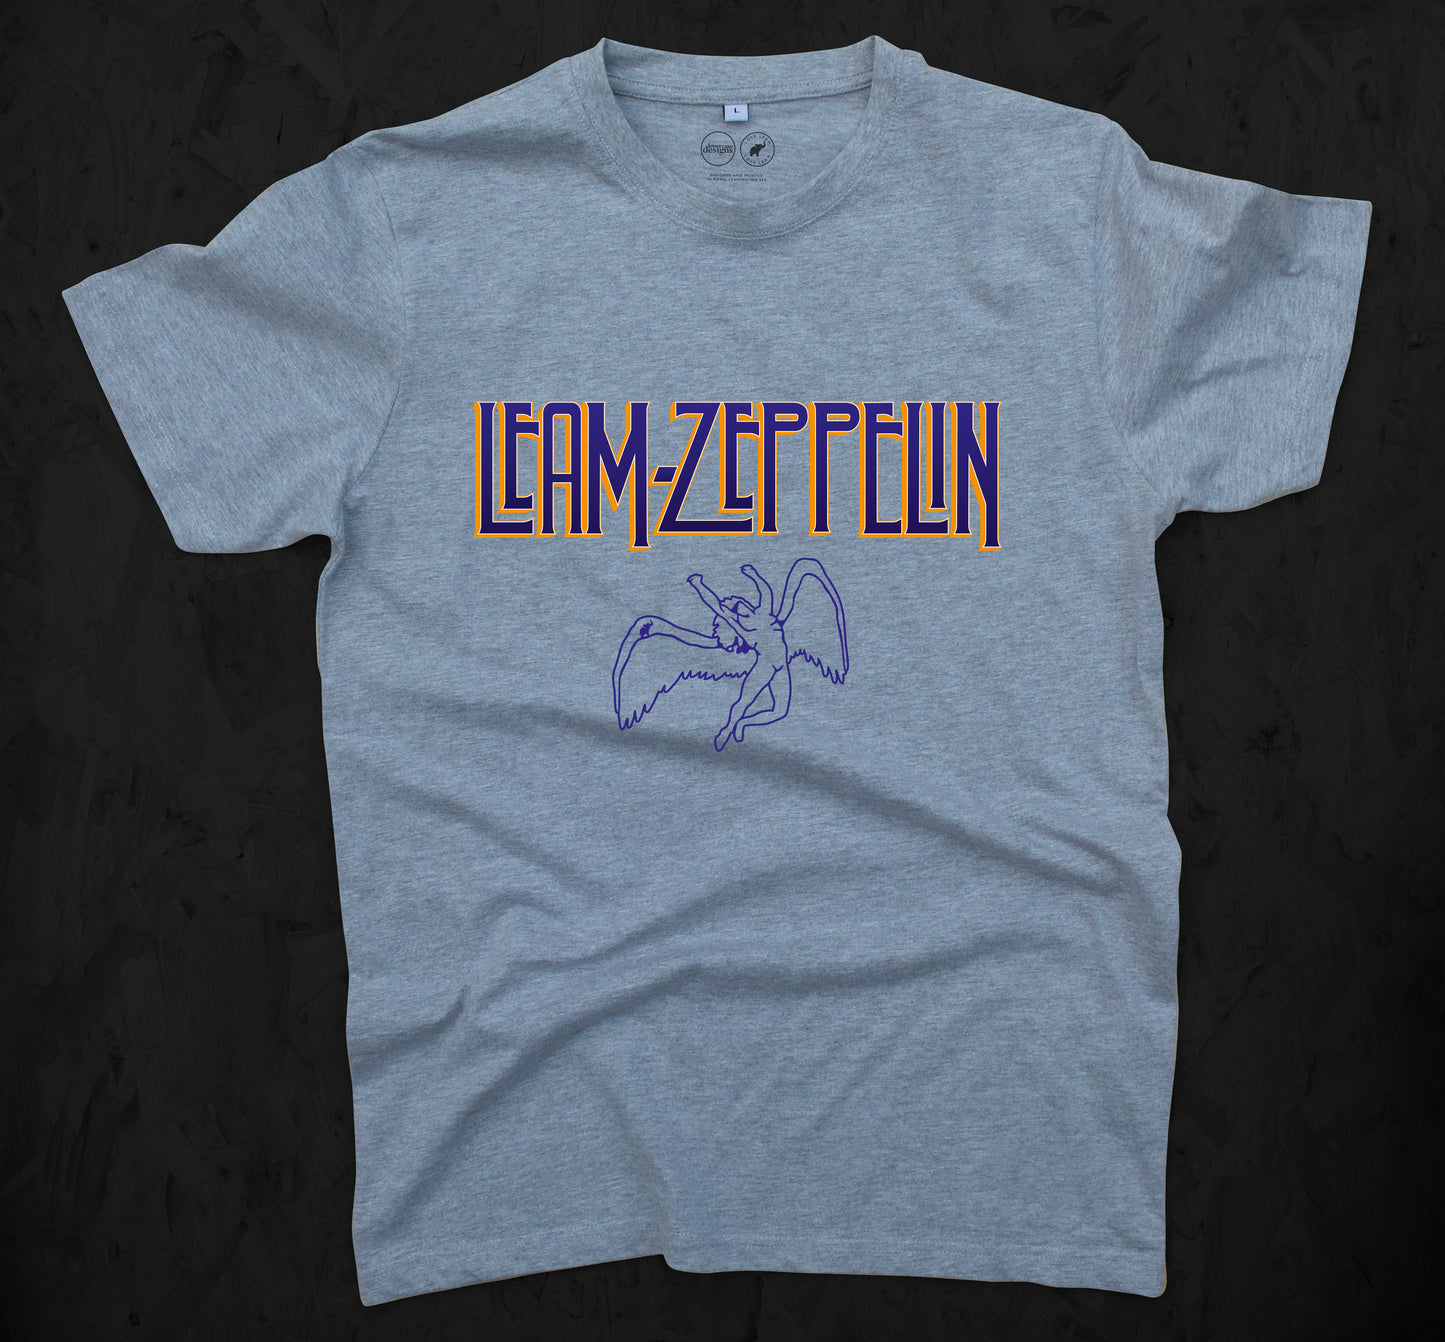 Leam Zeppelin